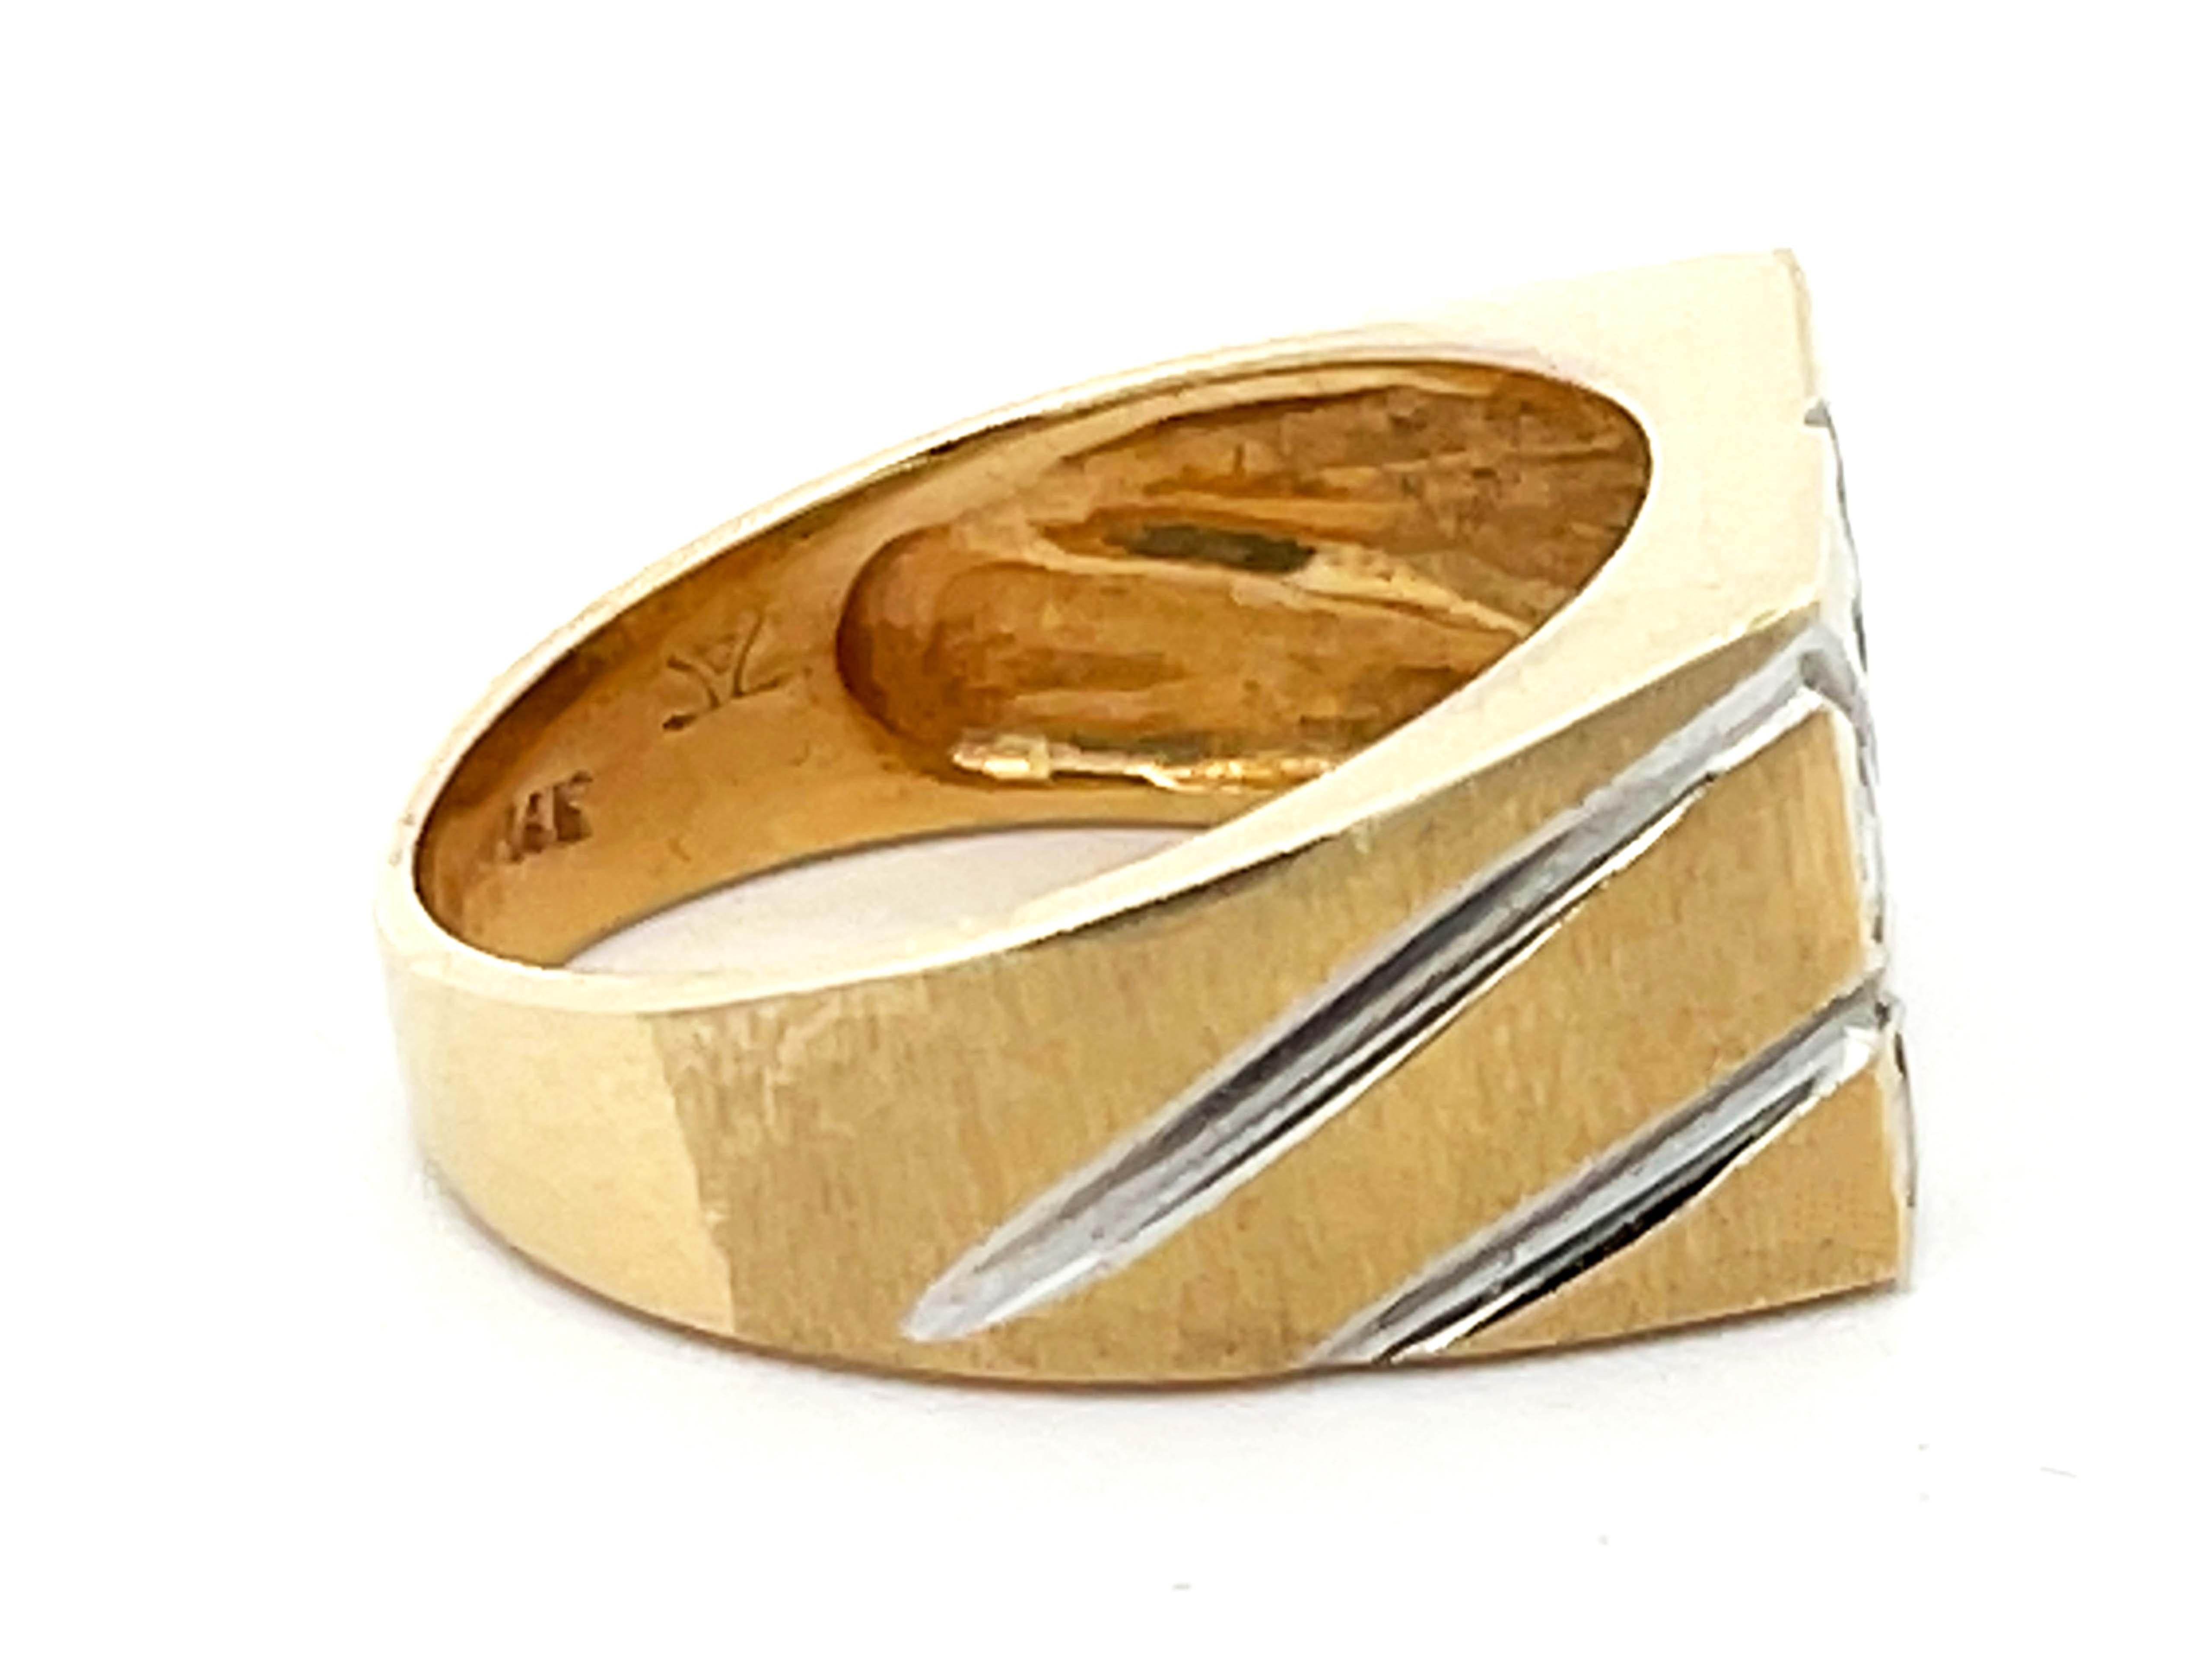 Brilliant Cut Levian Fan Design Diamond 2-Toned Mens Ring in 14k Gold For Sale